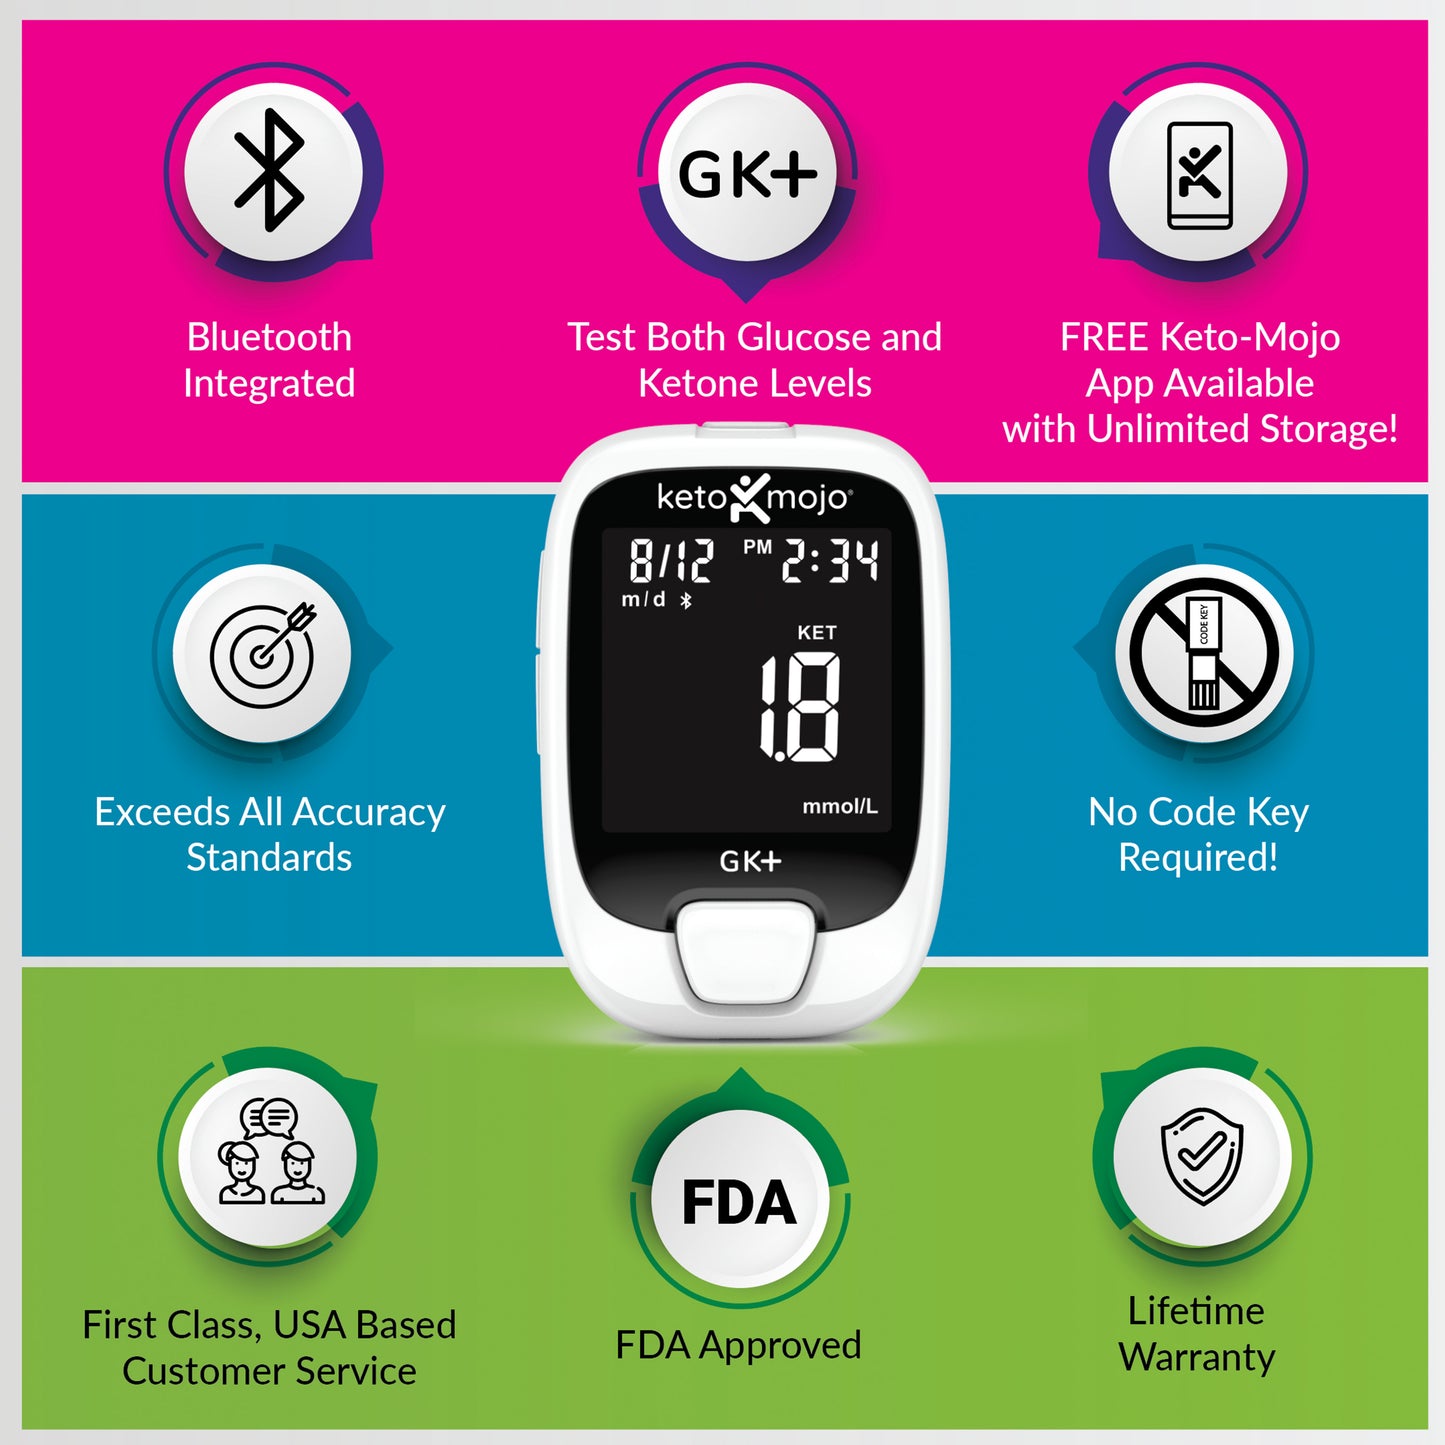 Keto-Mojo GK+ Blood Glucose & Ketone Basic Meter Kit - Official Company Listing